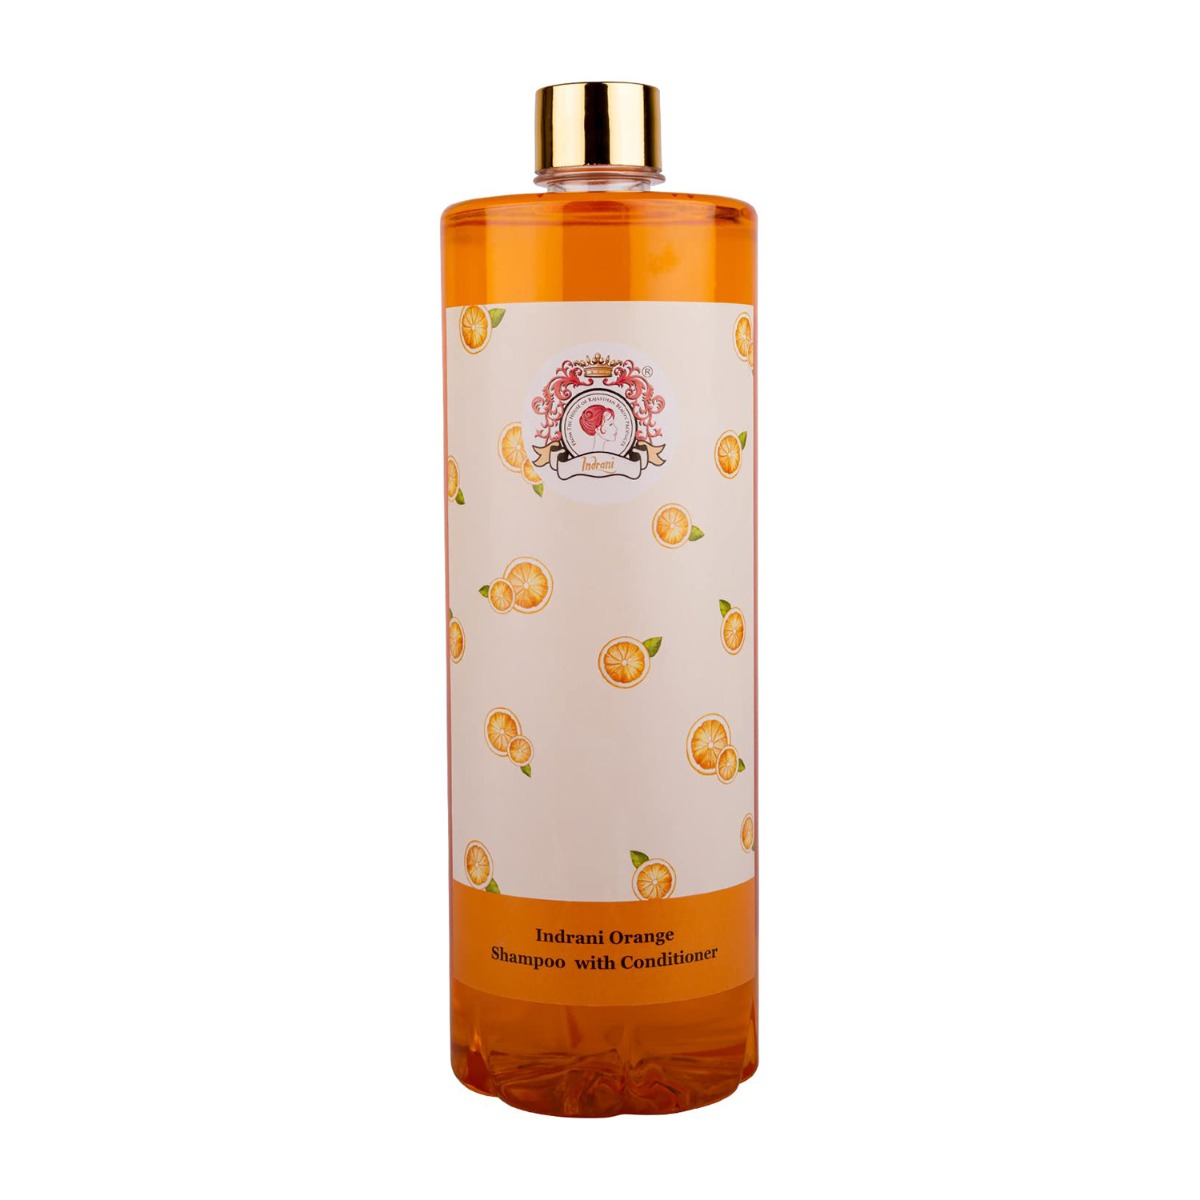 Indrani Orange Shampoo, 1ltr